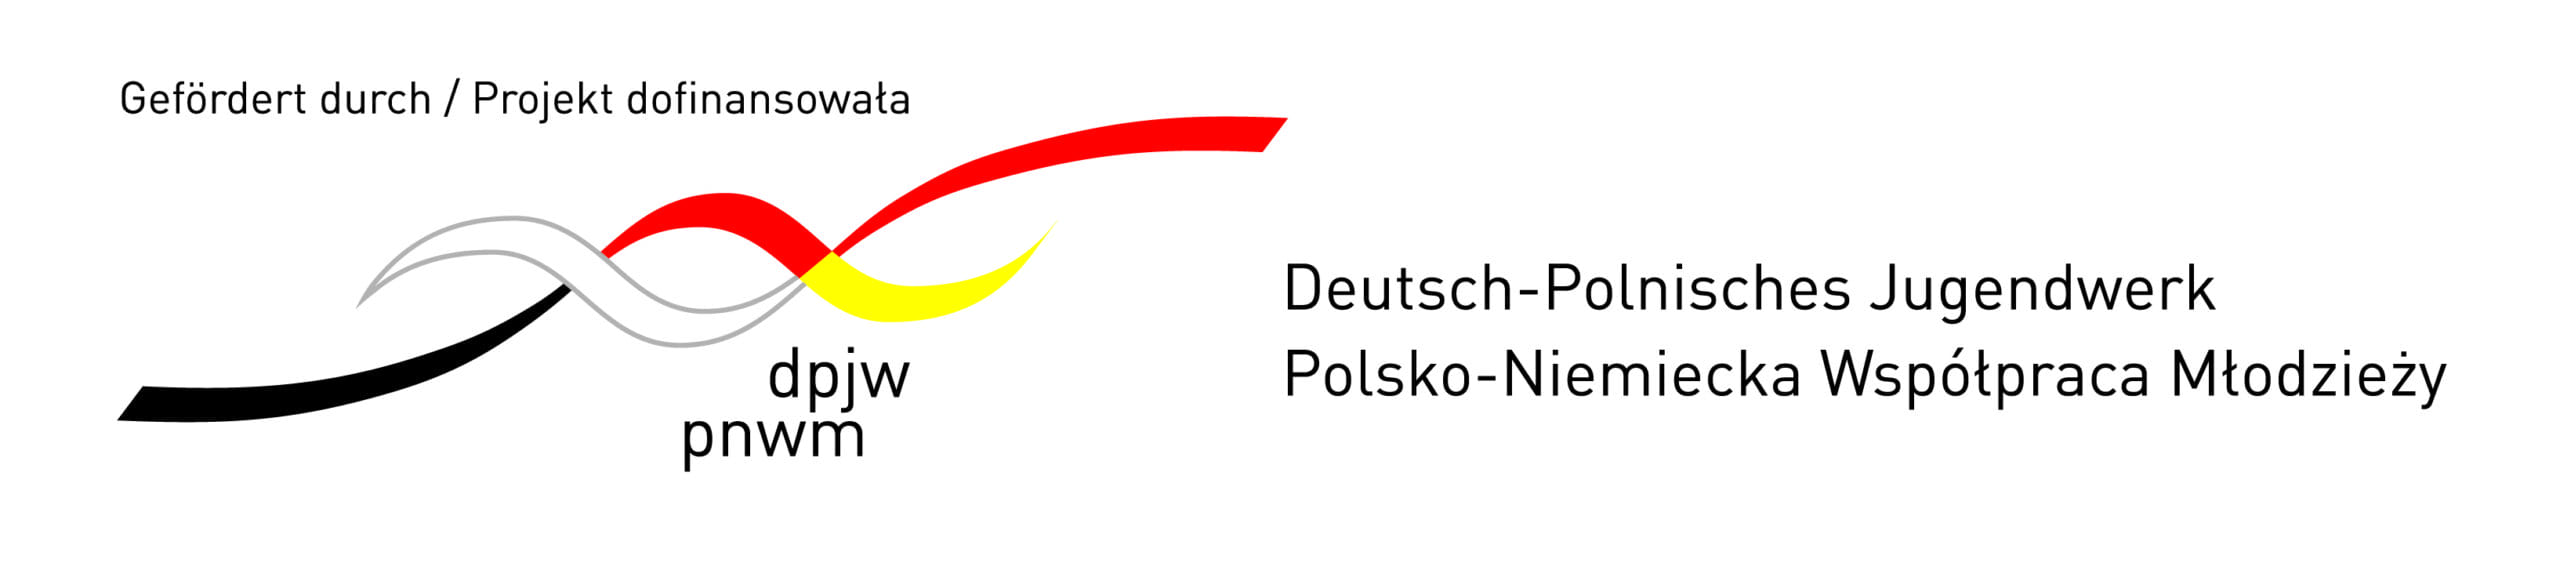 Logo DPJW JPG flach für geförderte Projekte